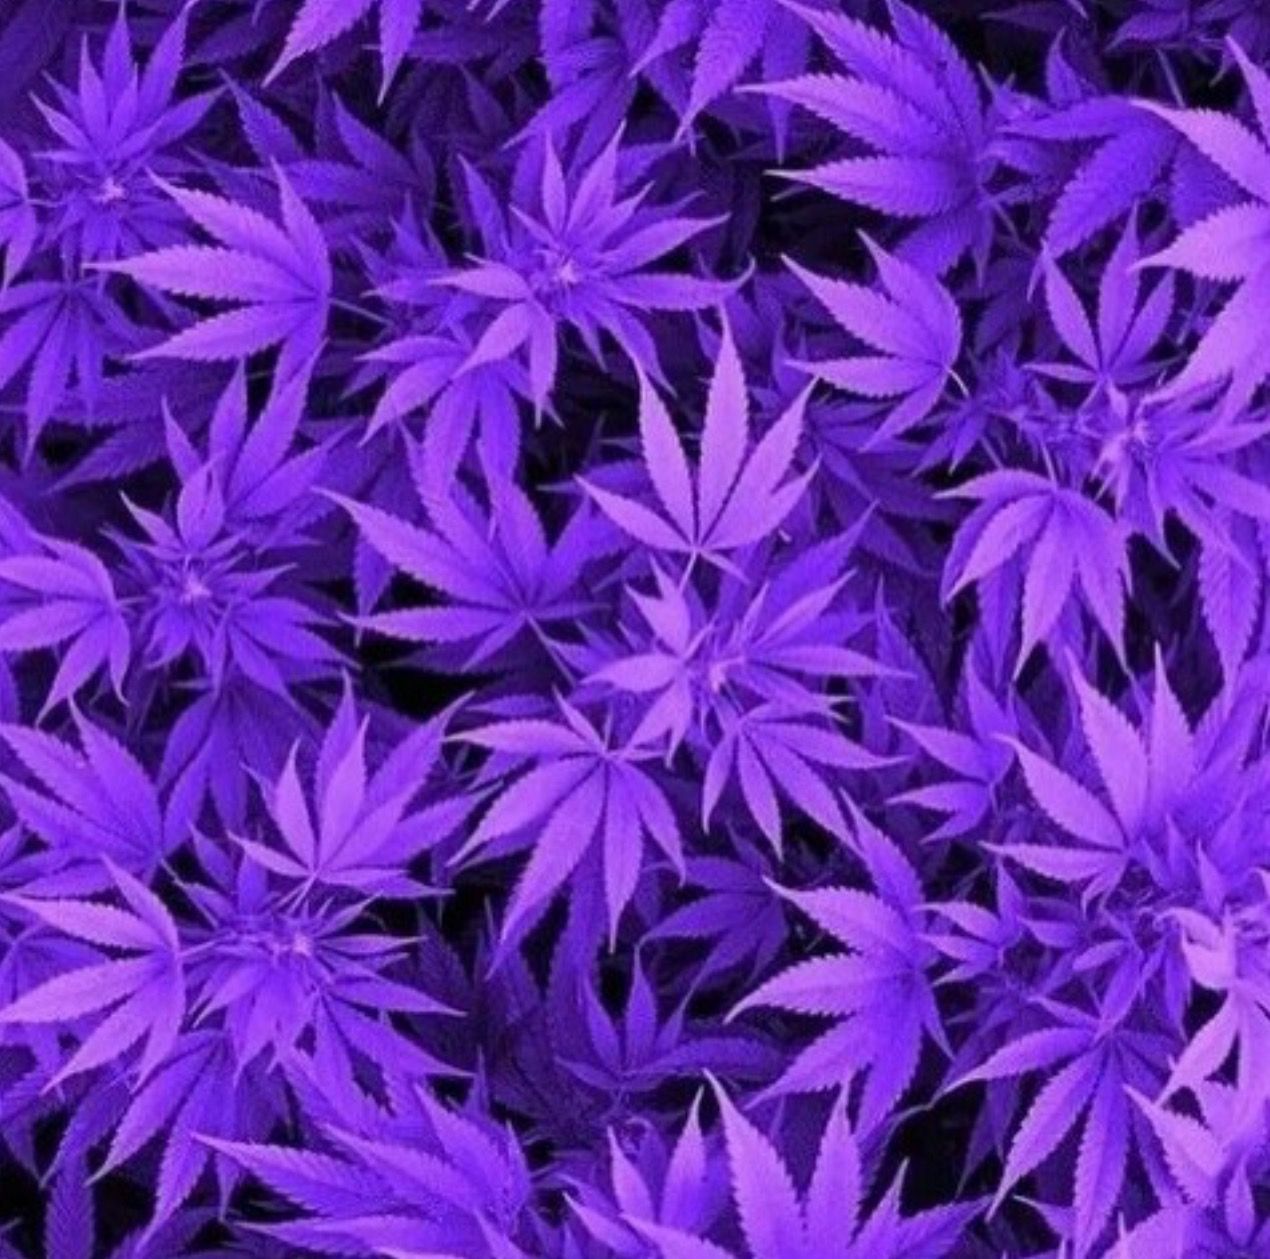  Weed Hintergrundbild 1270x1259. Purple Weed Wallpaper Free Purple Weed Background